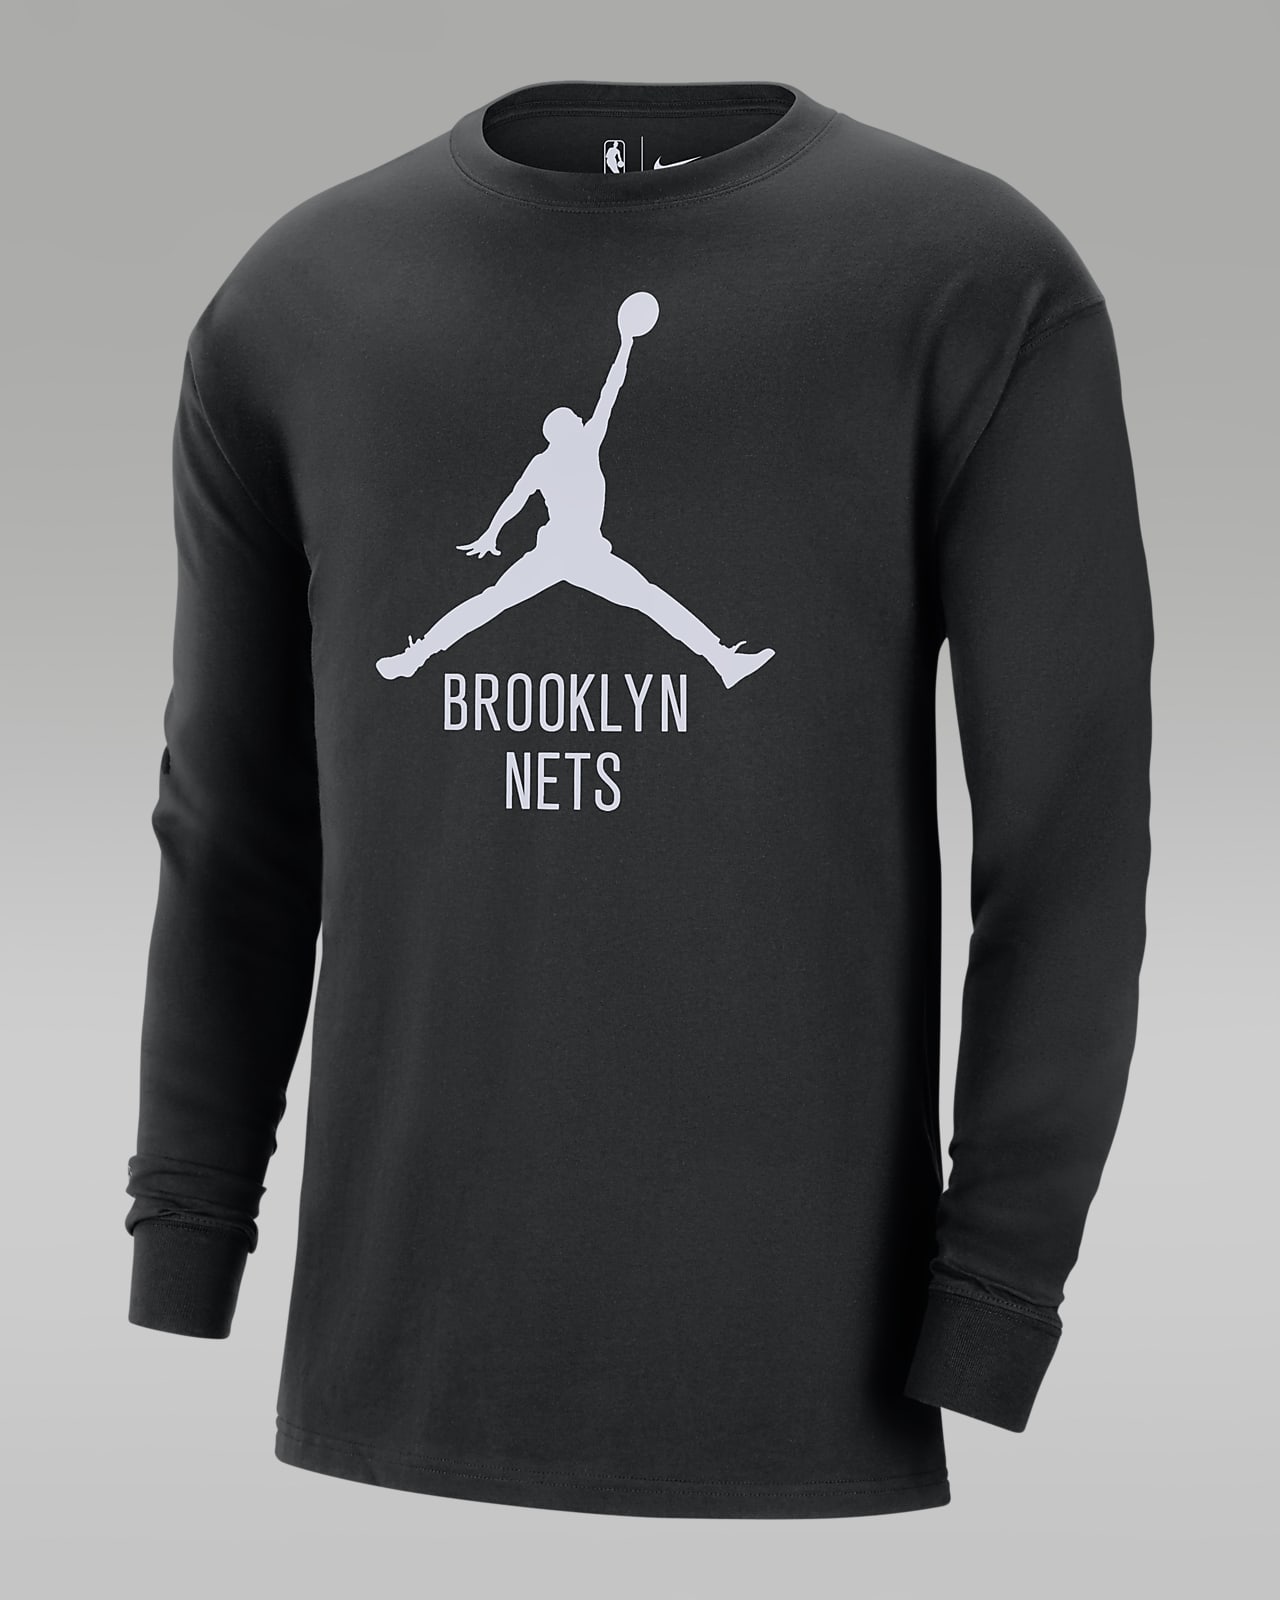 Nets NBA Brooklyn T-Shirt. Long-Sleeve Men\'s Essential Jordan